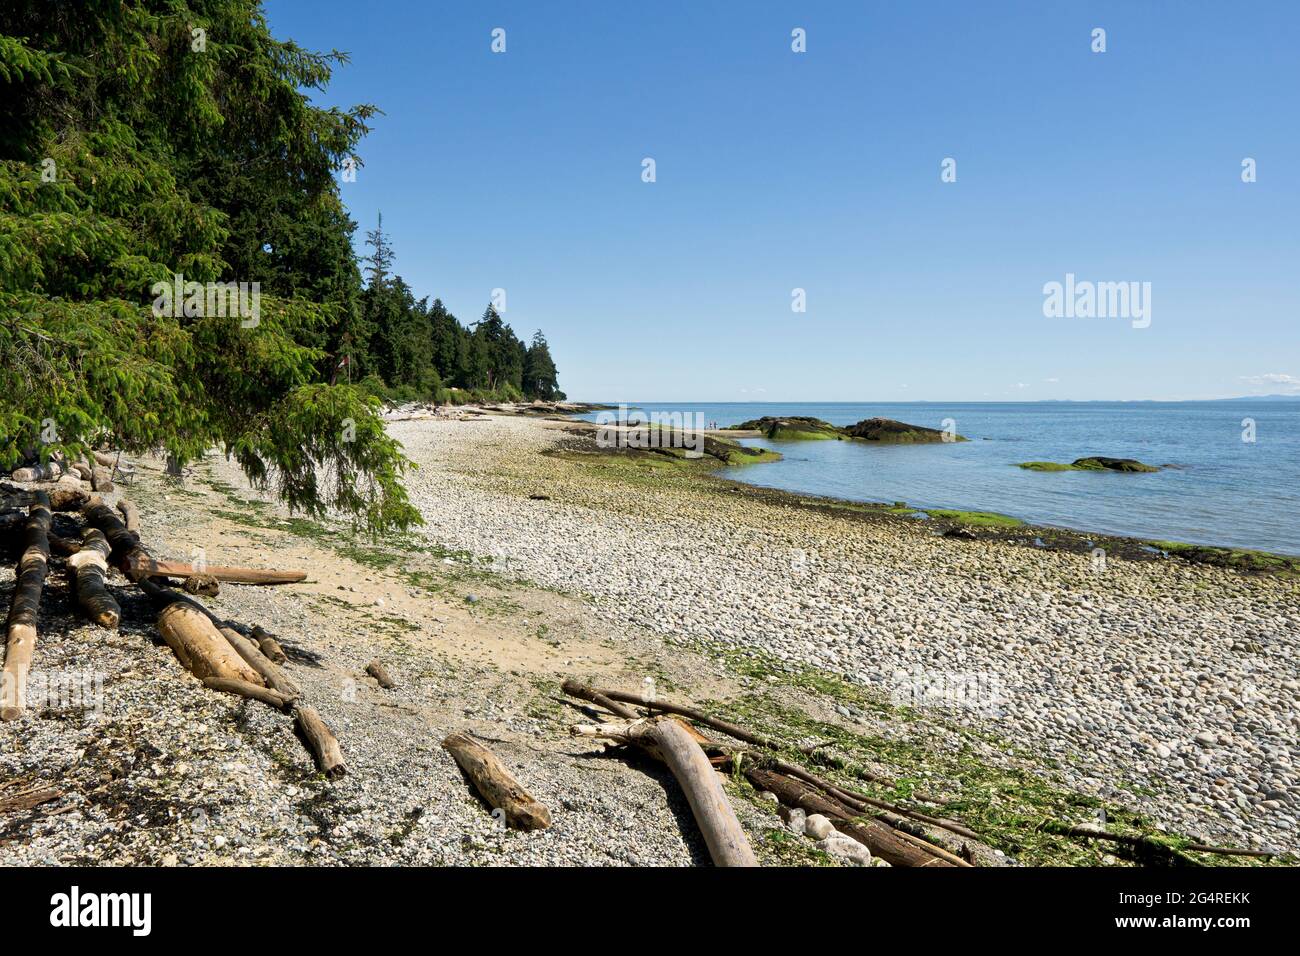 Beautiful coastline in Gibsons, British Columbia, Canada on the Sunshine Coast. Stock Photo